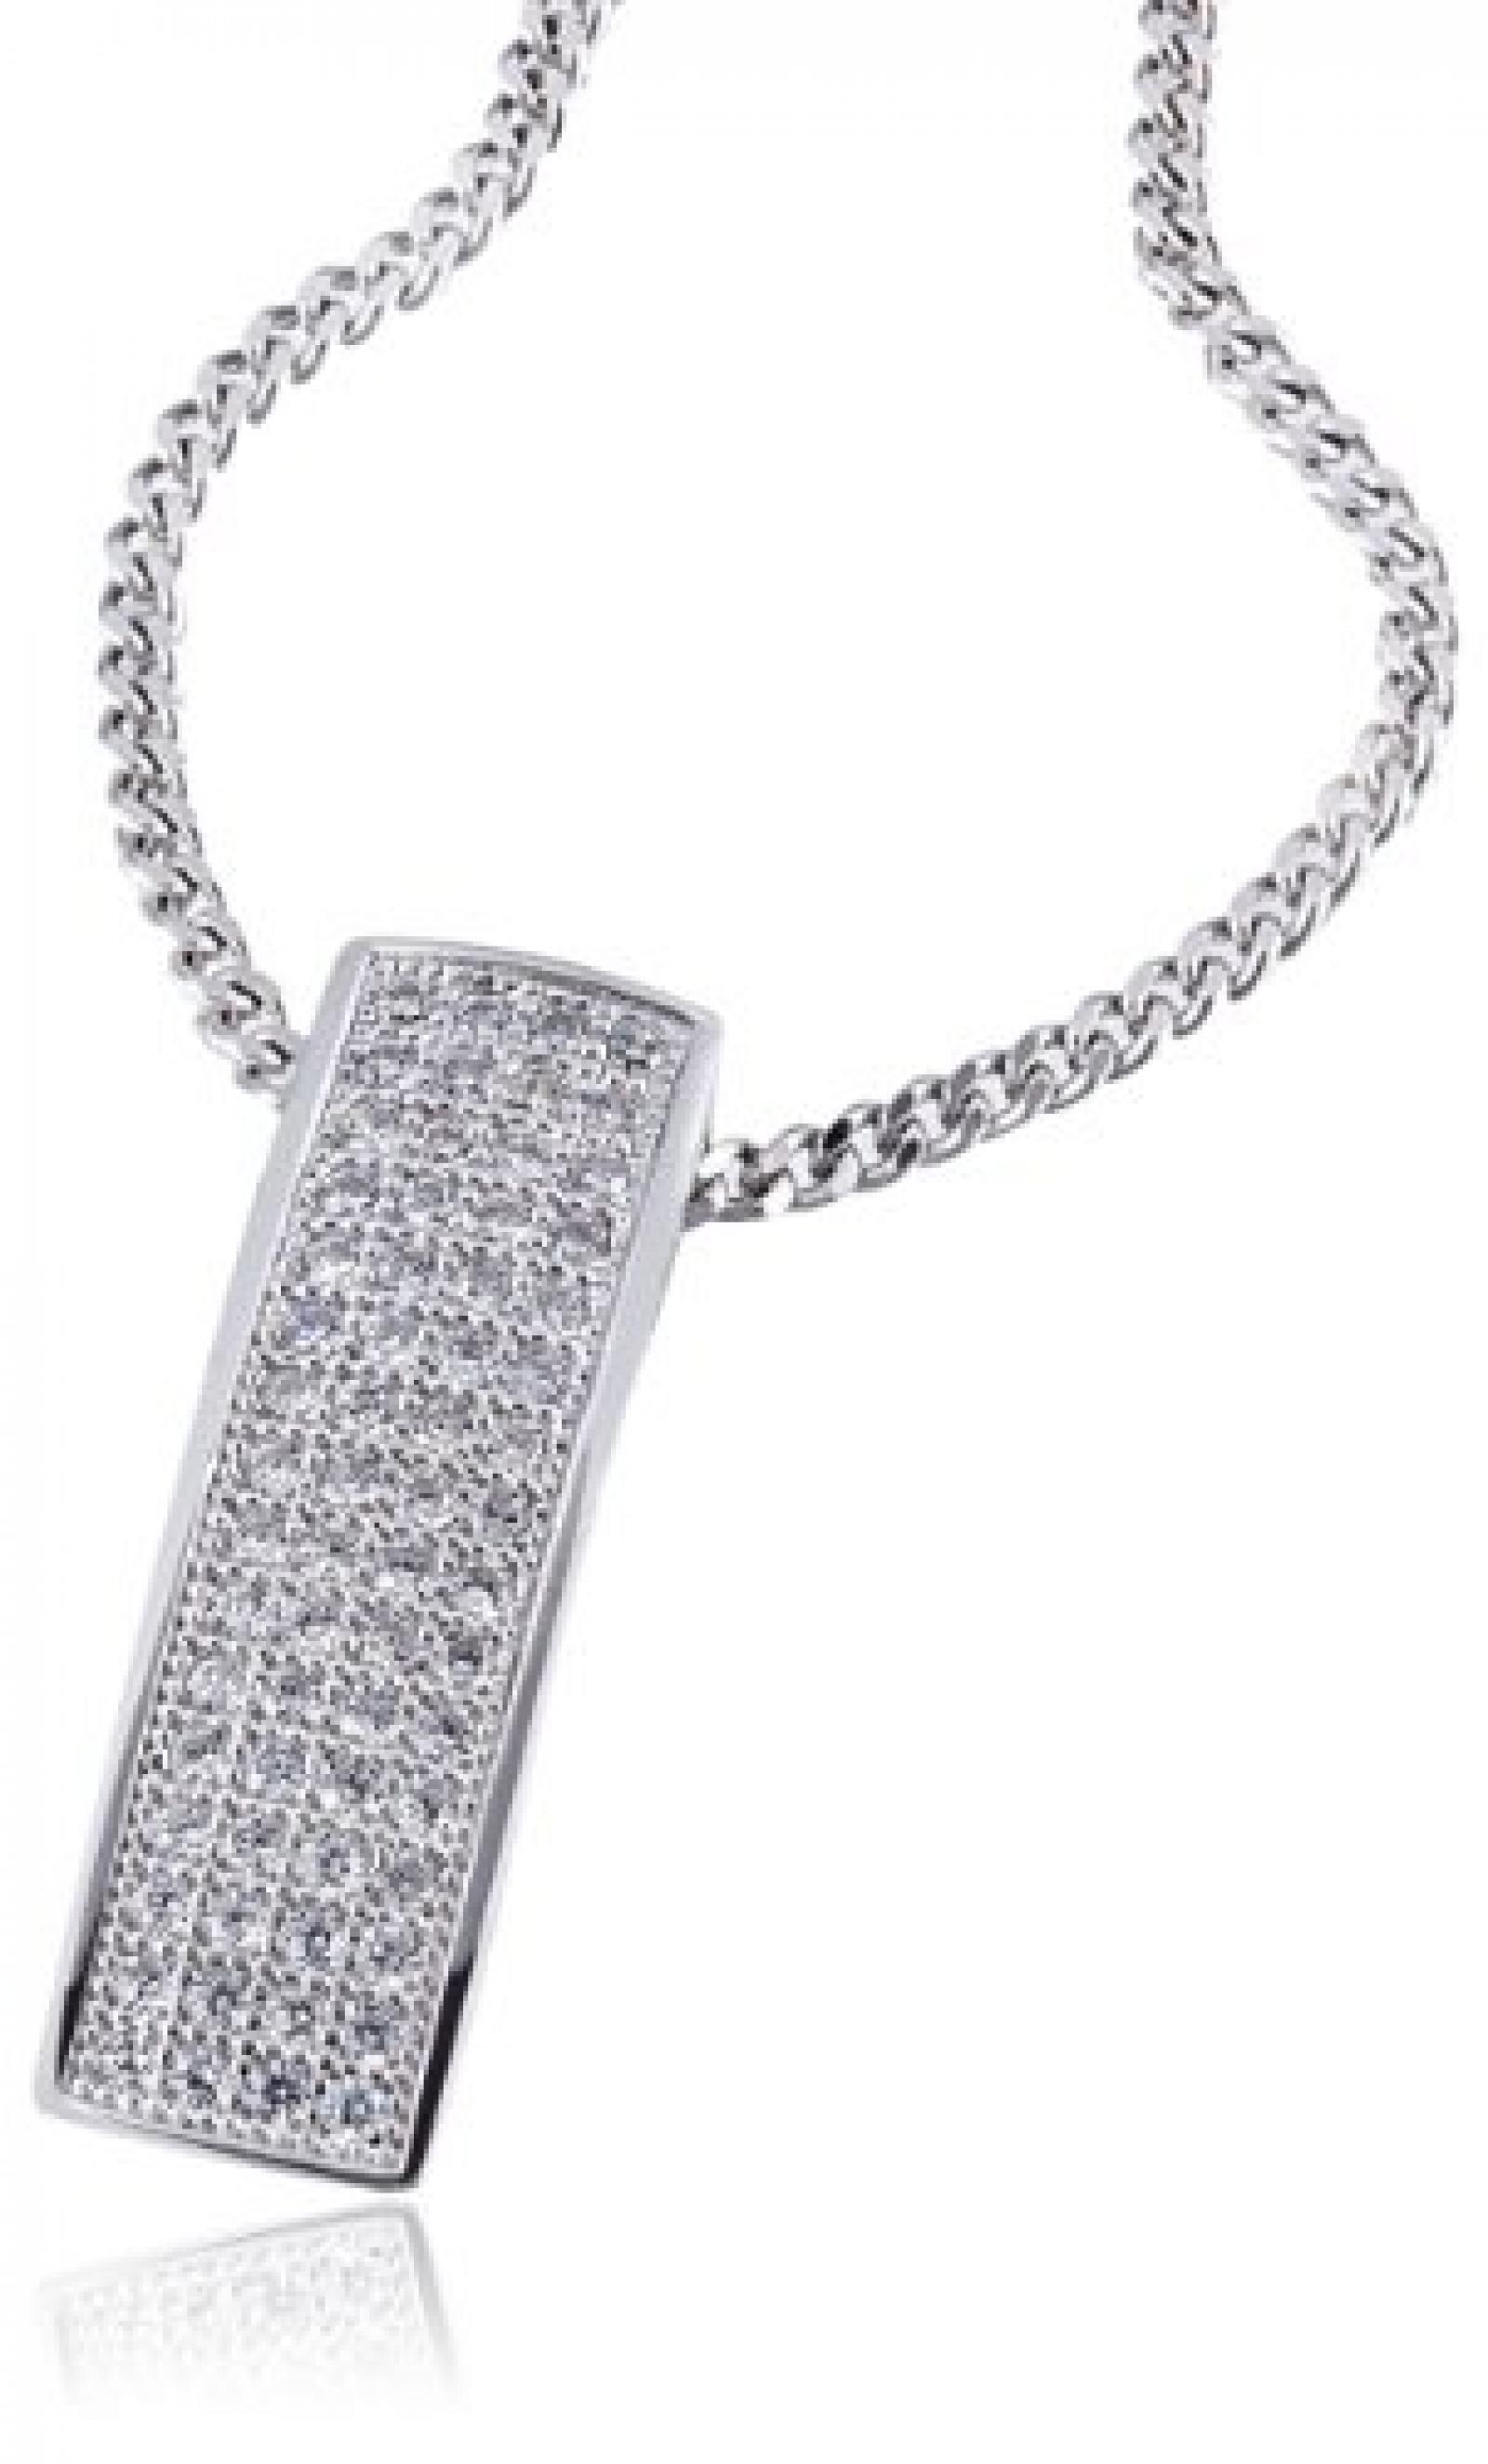 Goldmaid Damen-Halskette 925 Sterling Silber Glamshine 64 weiße Zirkonia 45 cm Pa C5764S 